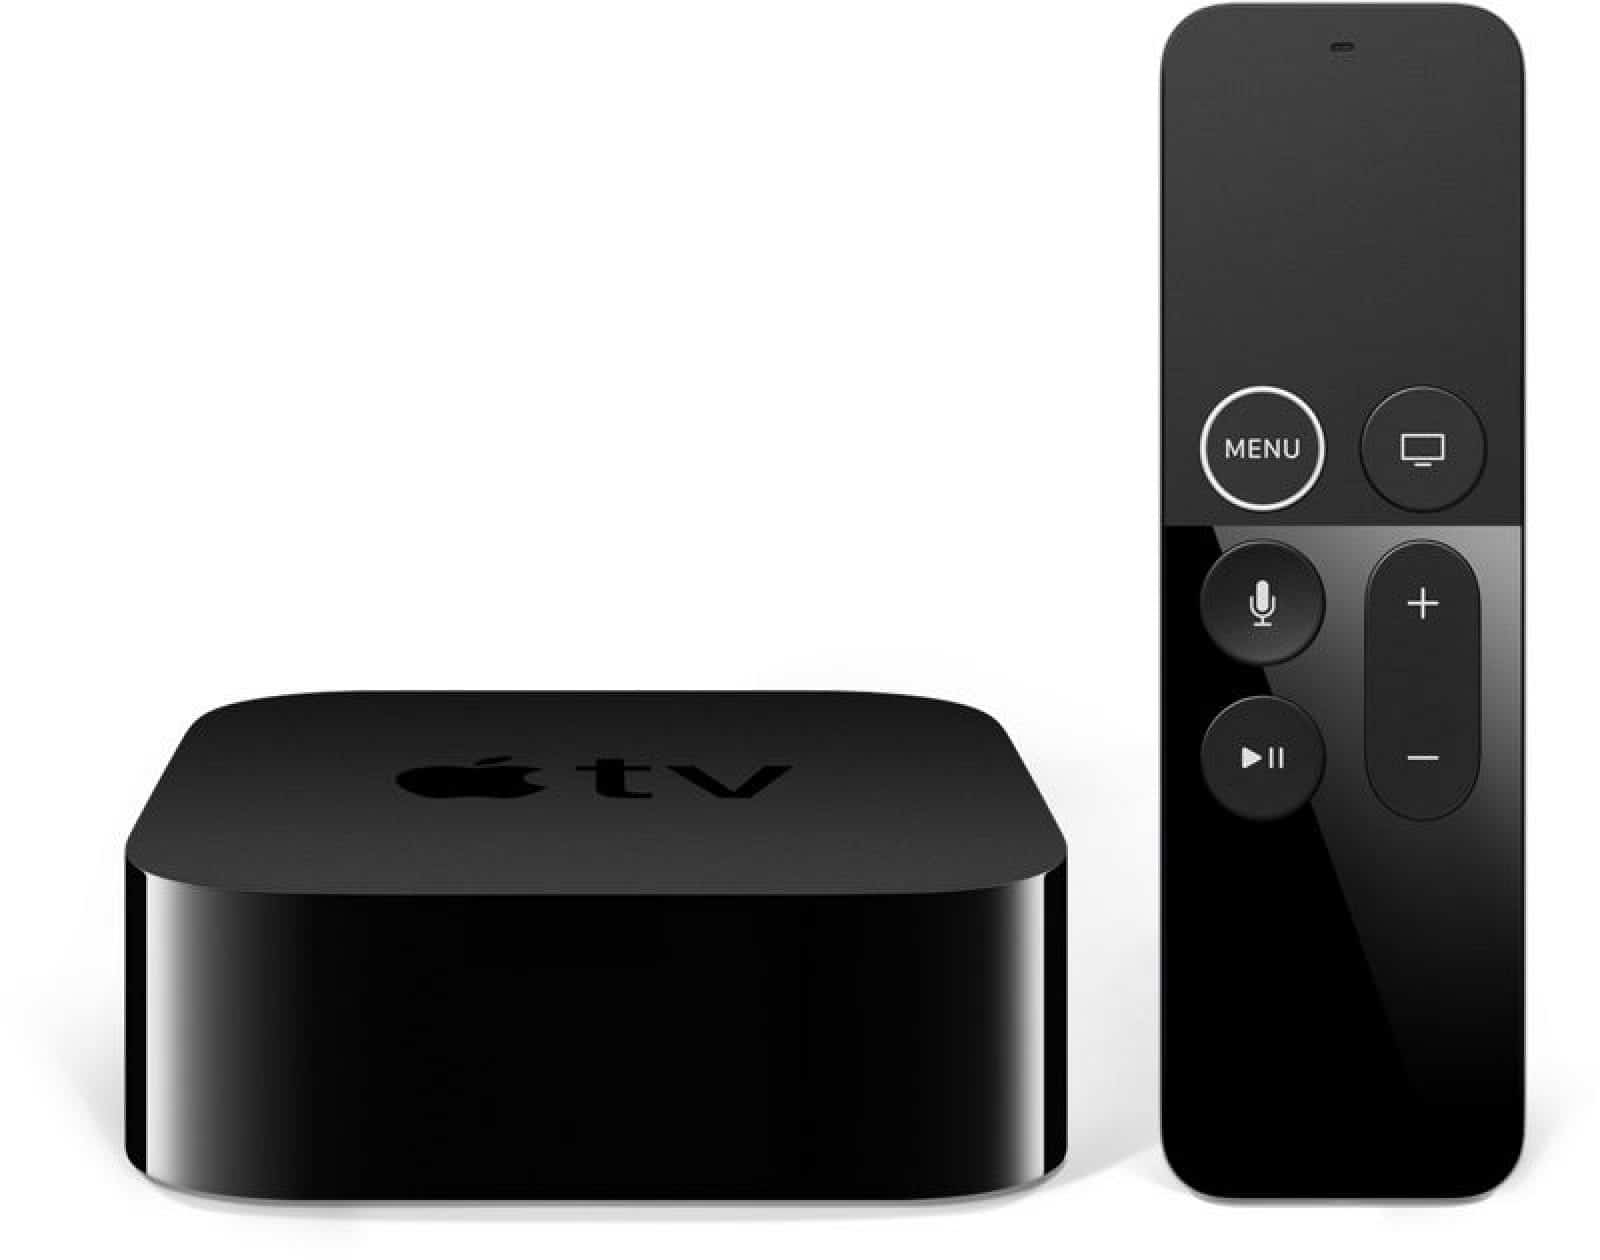 Apple TV 4K sale. Get yourself a good deal on the latest Apple TV 4K.